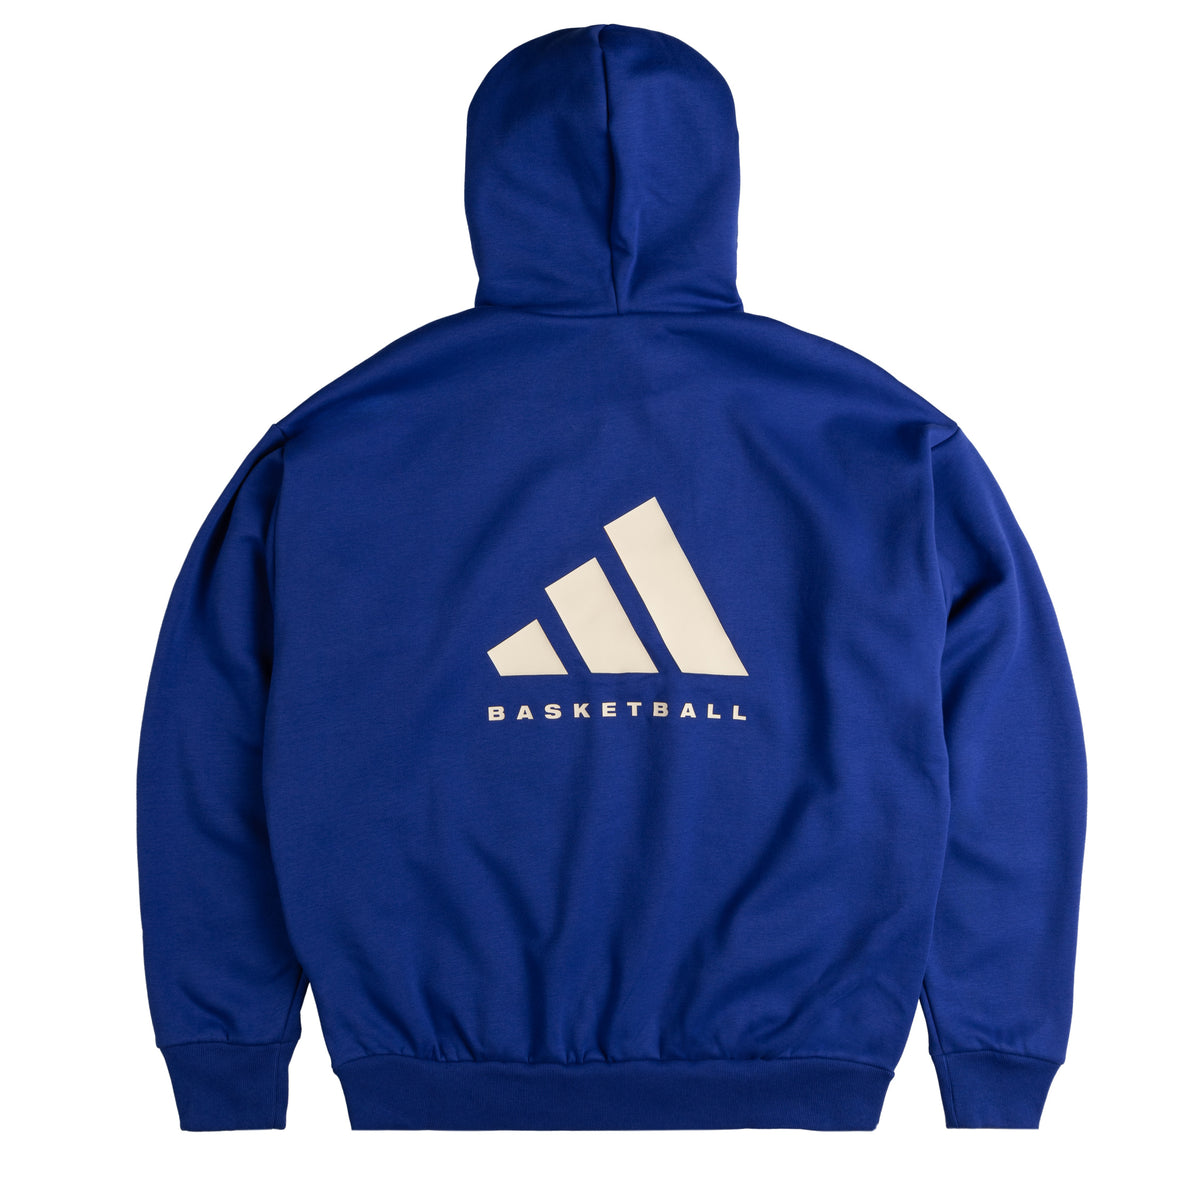 at Hoodie Store! now – Adidas Basketball Fleece Asphaltgold Online buy